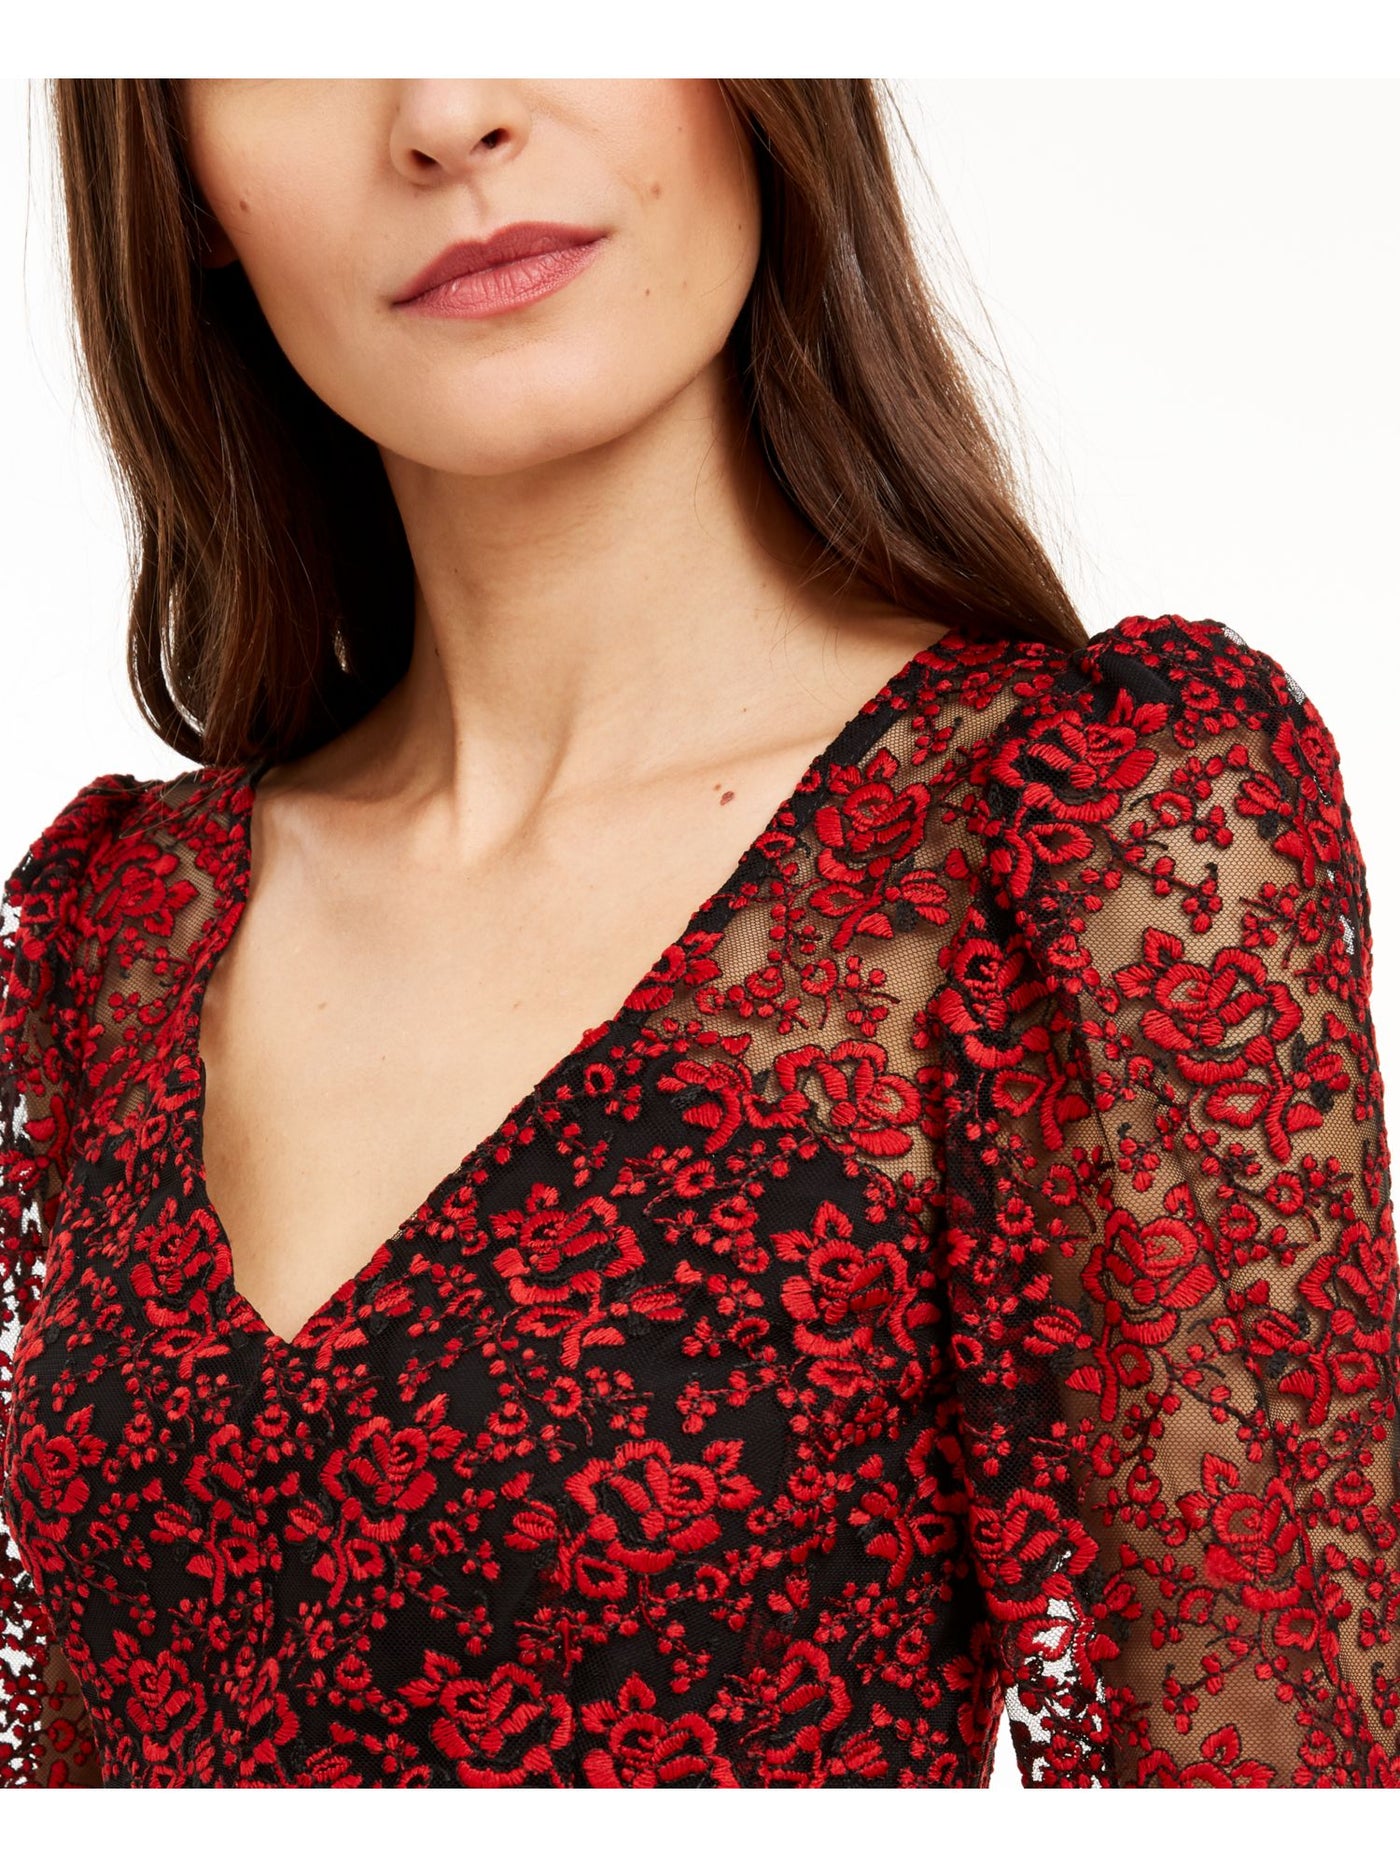 NANETTE LEPORE Womens Red Sheer Floral 3/4 Sleeve V Neck Top Size: 8